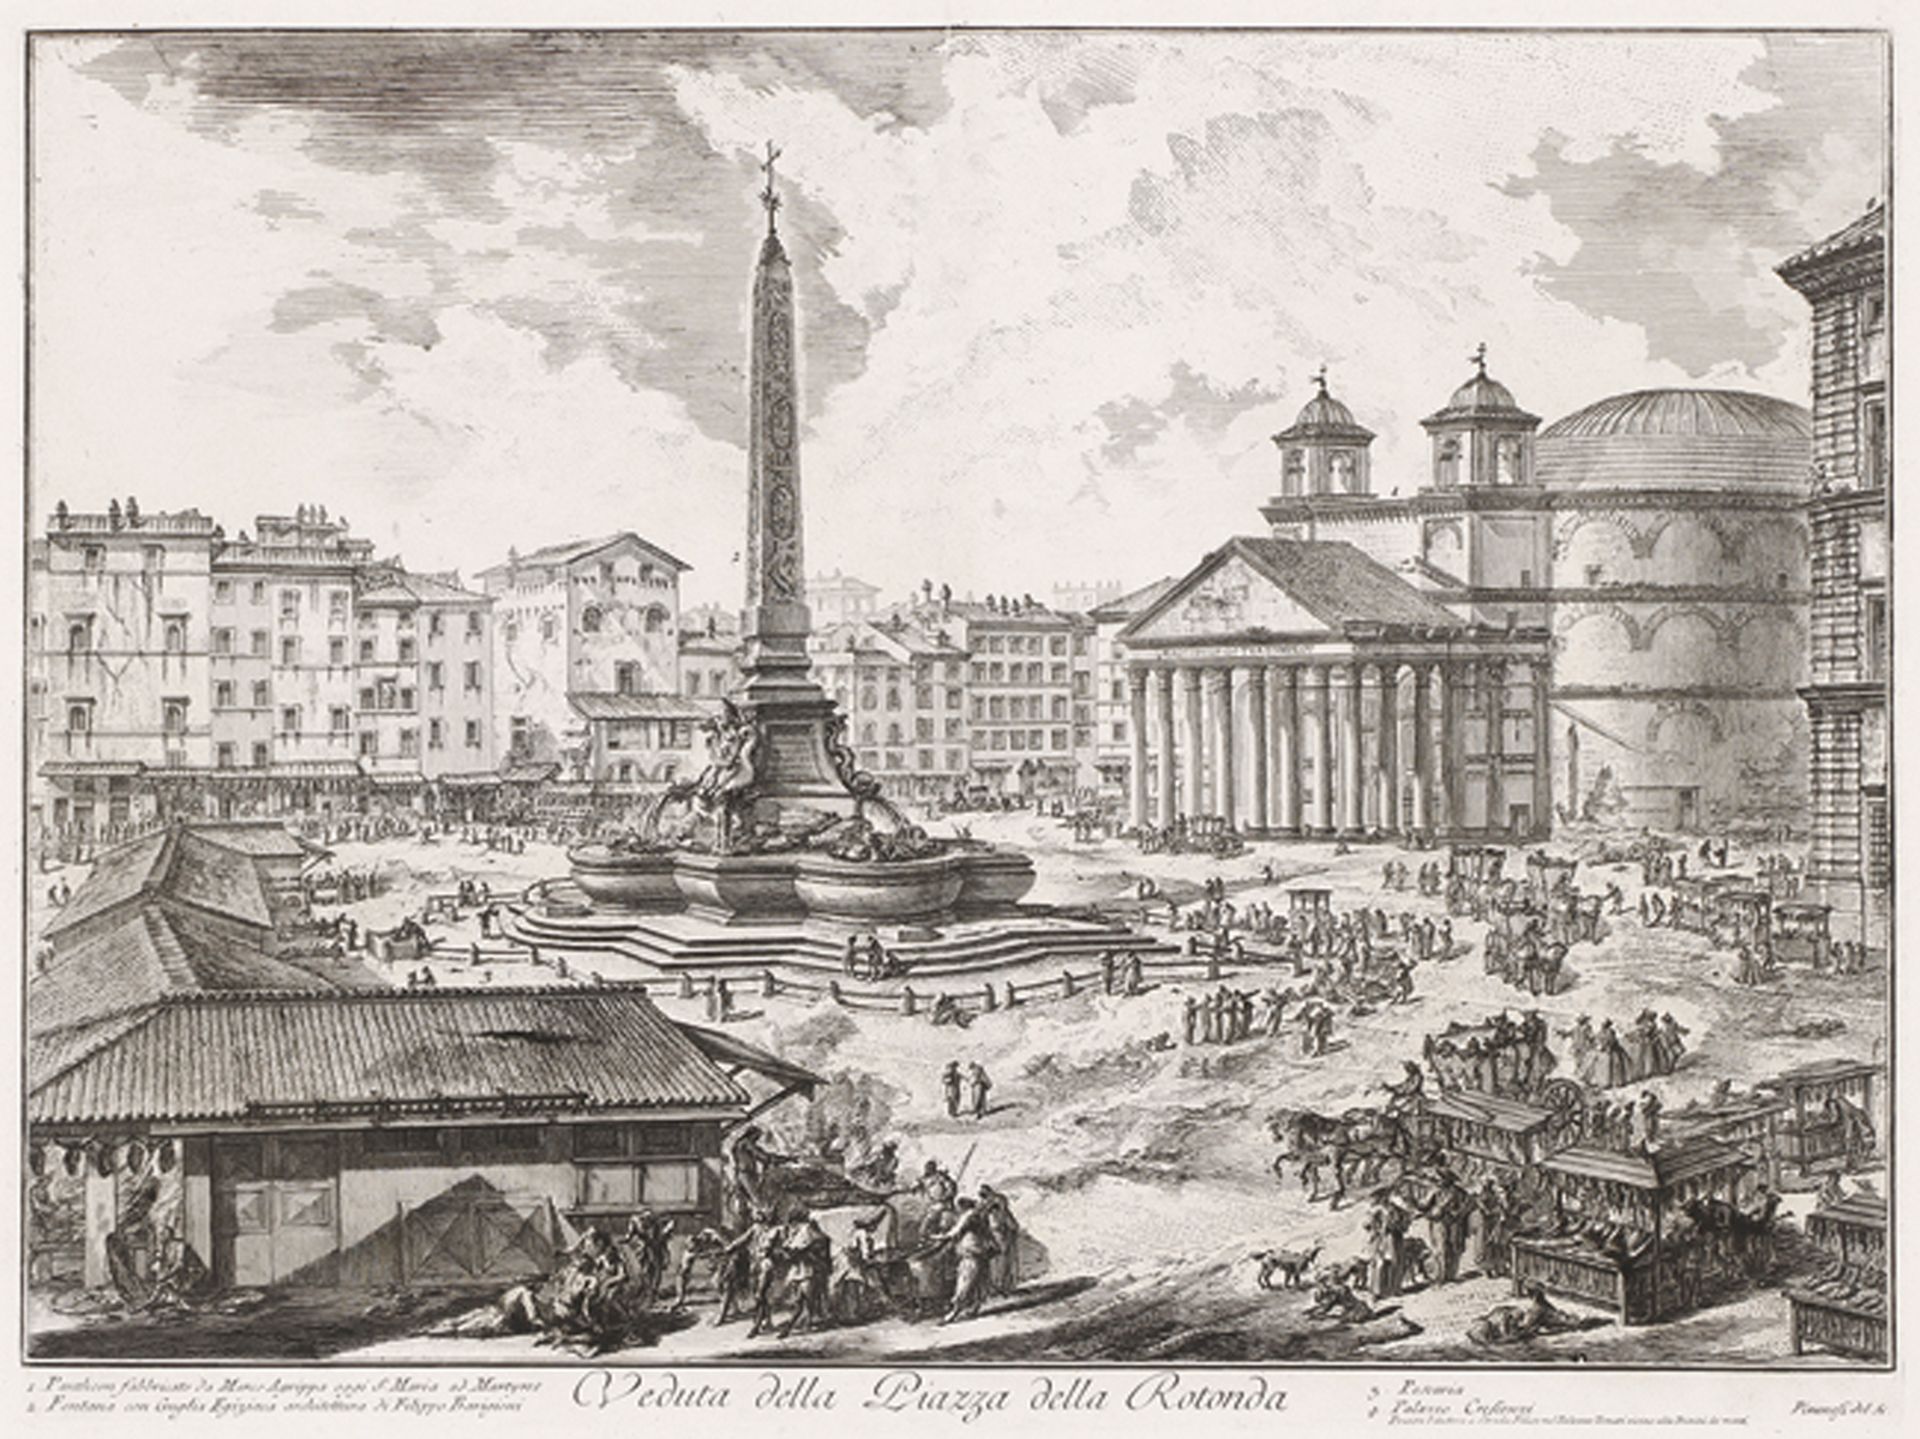 GIOVANNI BATTISTA PIRANESI: Veduta della Piazza della Rotonda.